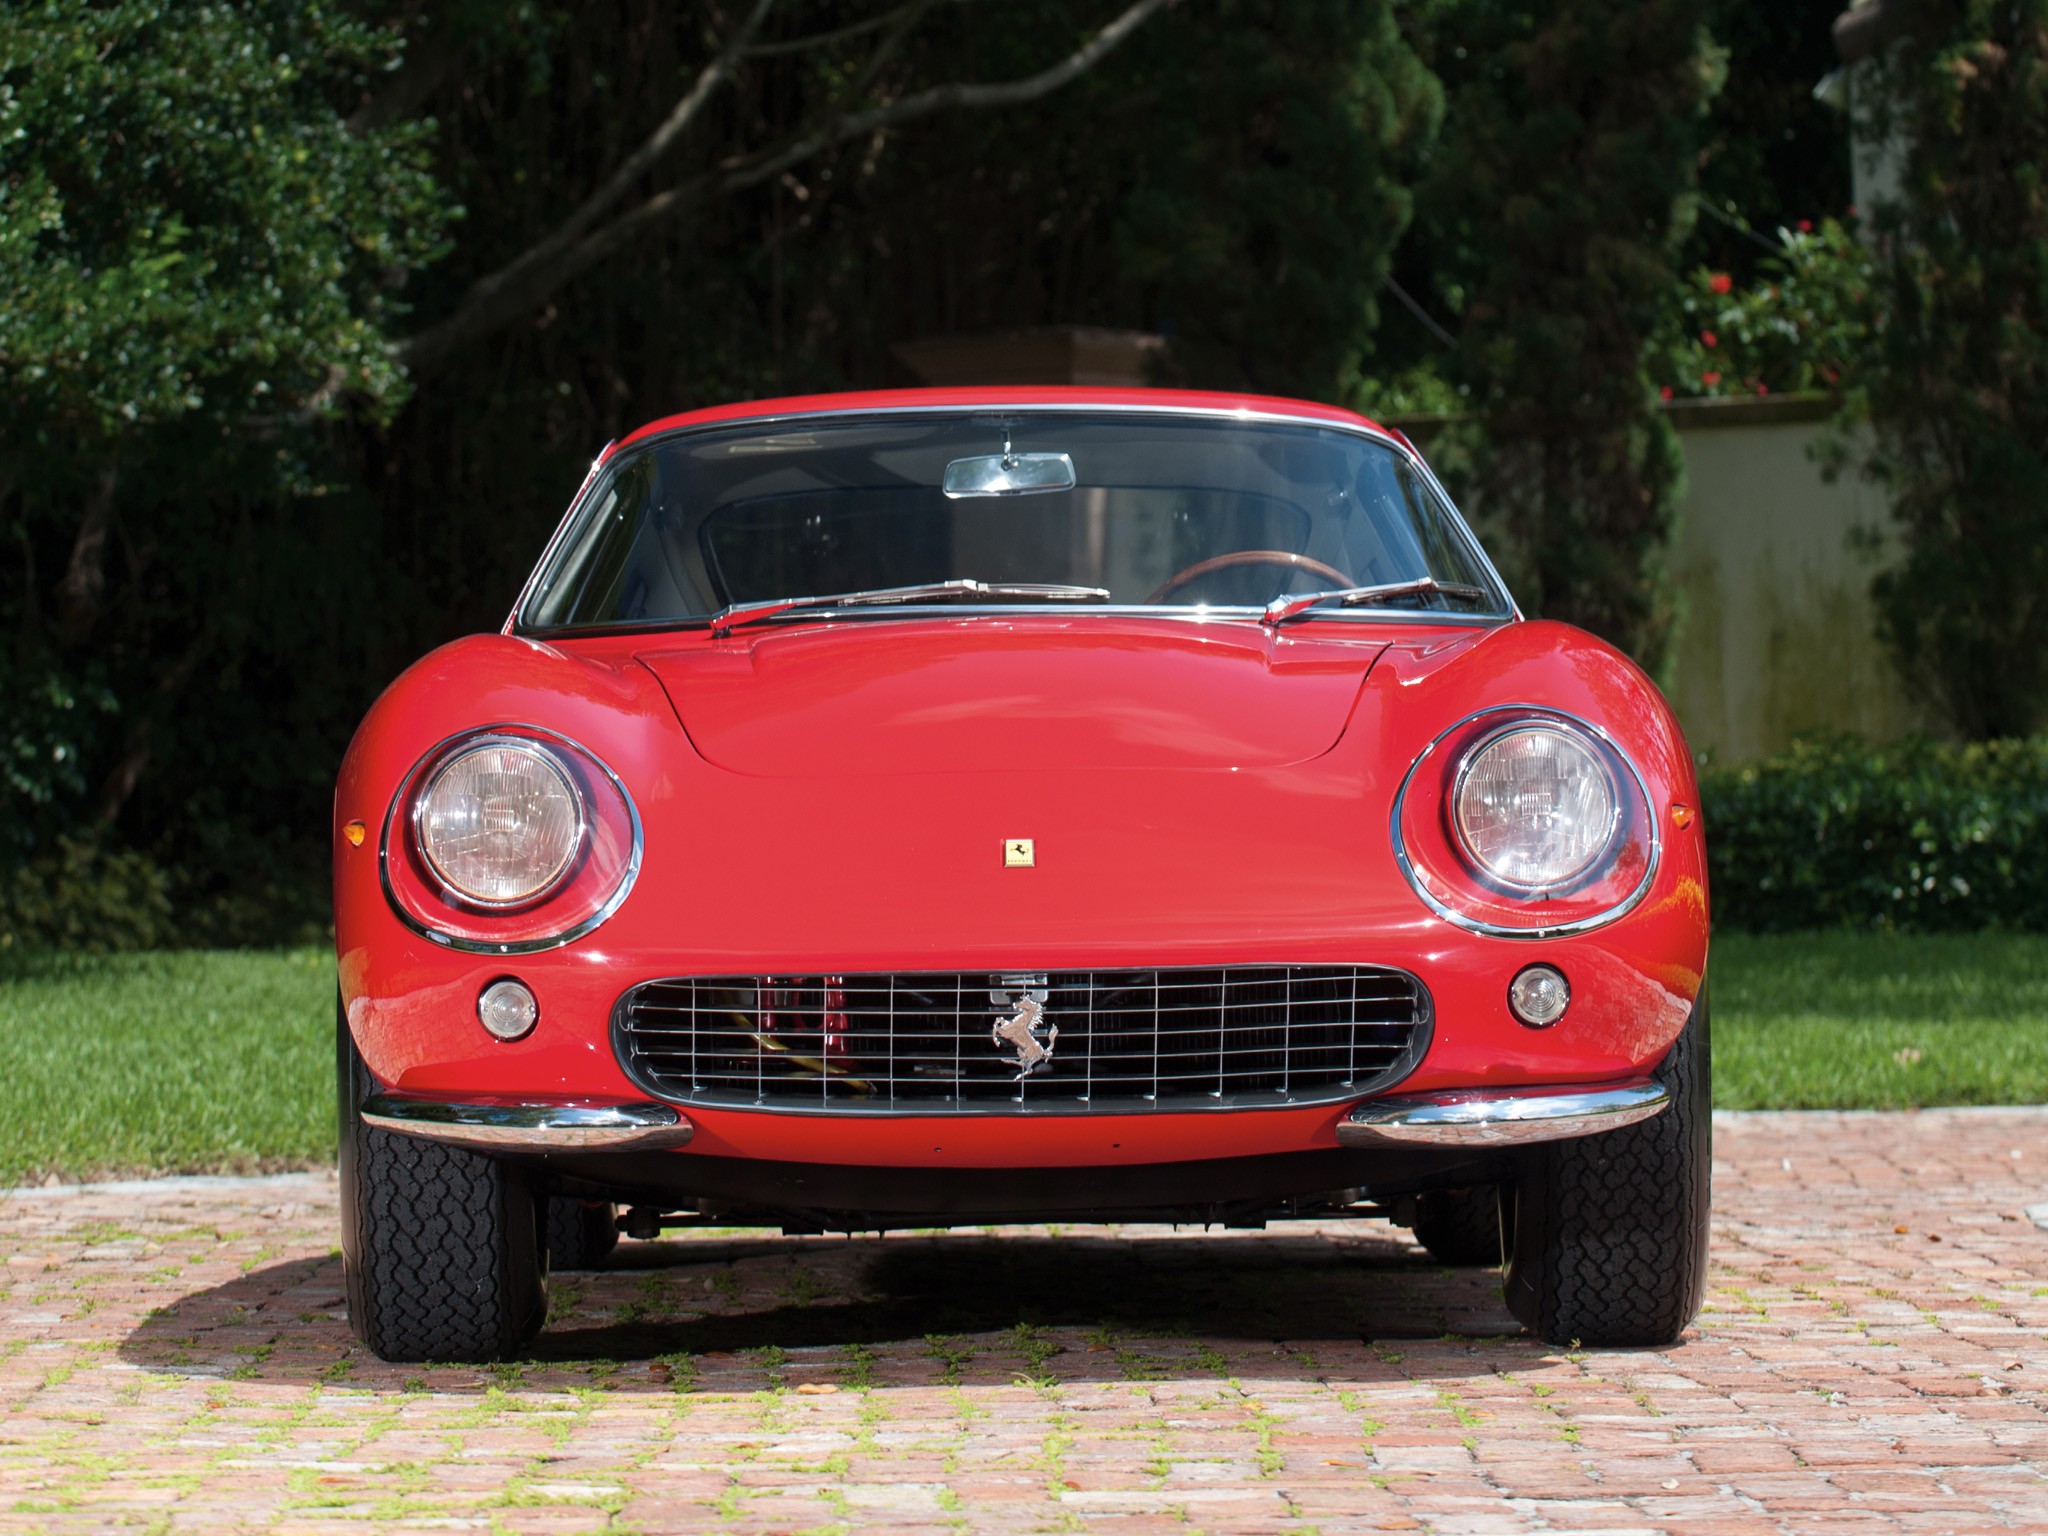 Ferrari 275 Gtb Specs And Photos 1964 1965 1966 1967 1968